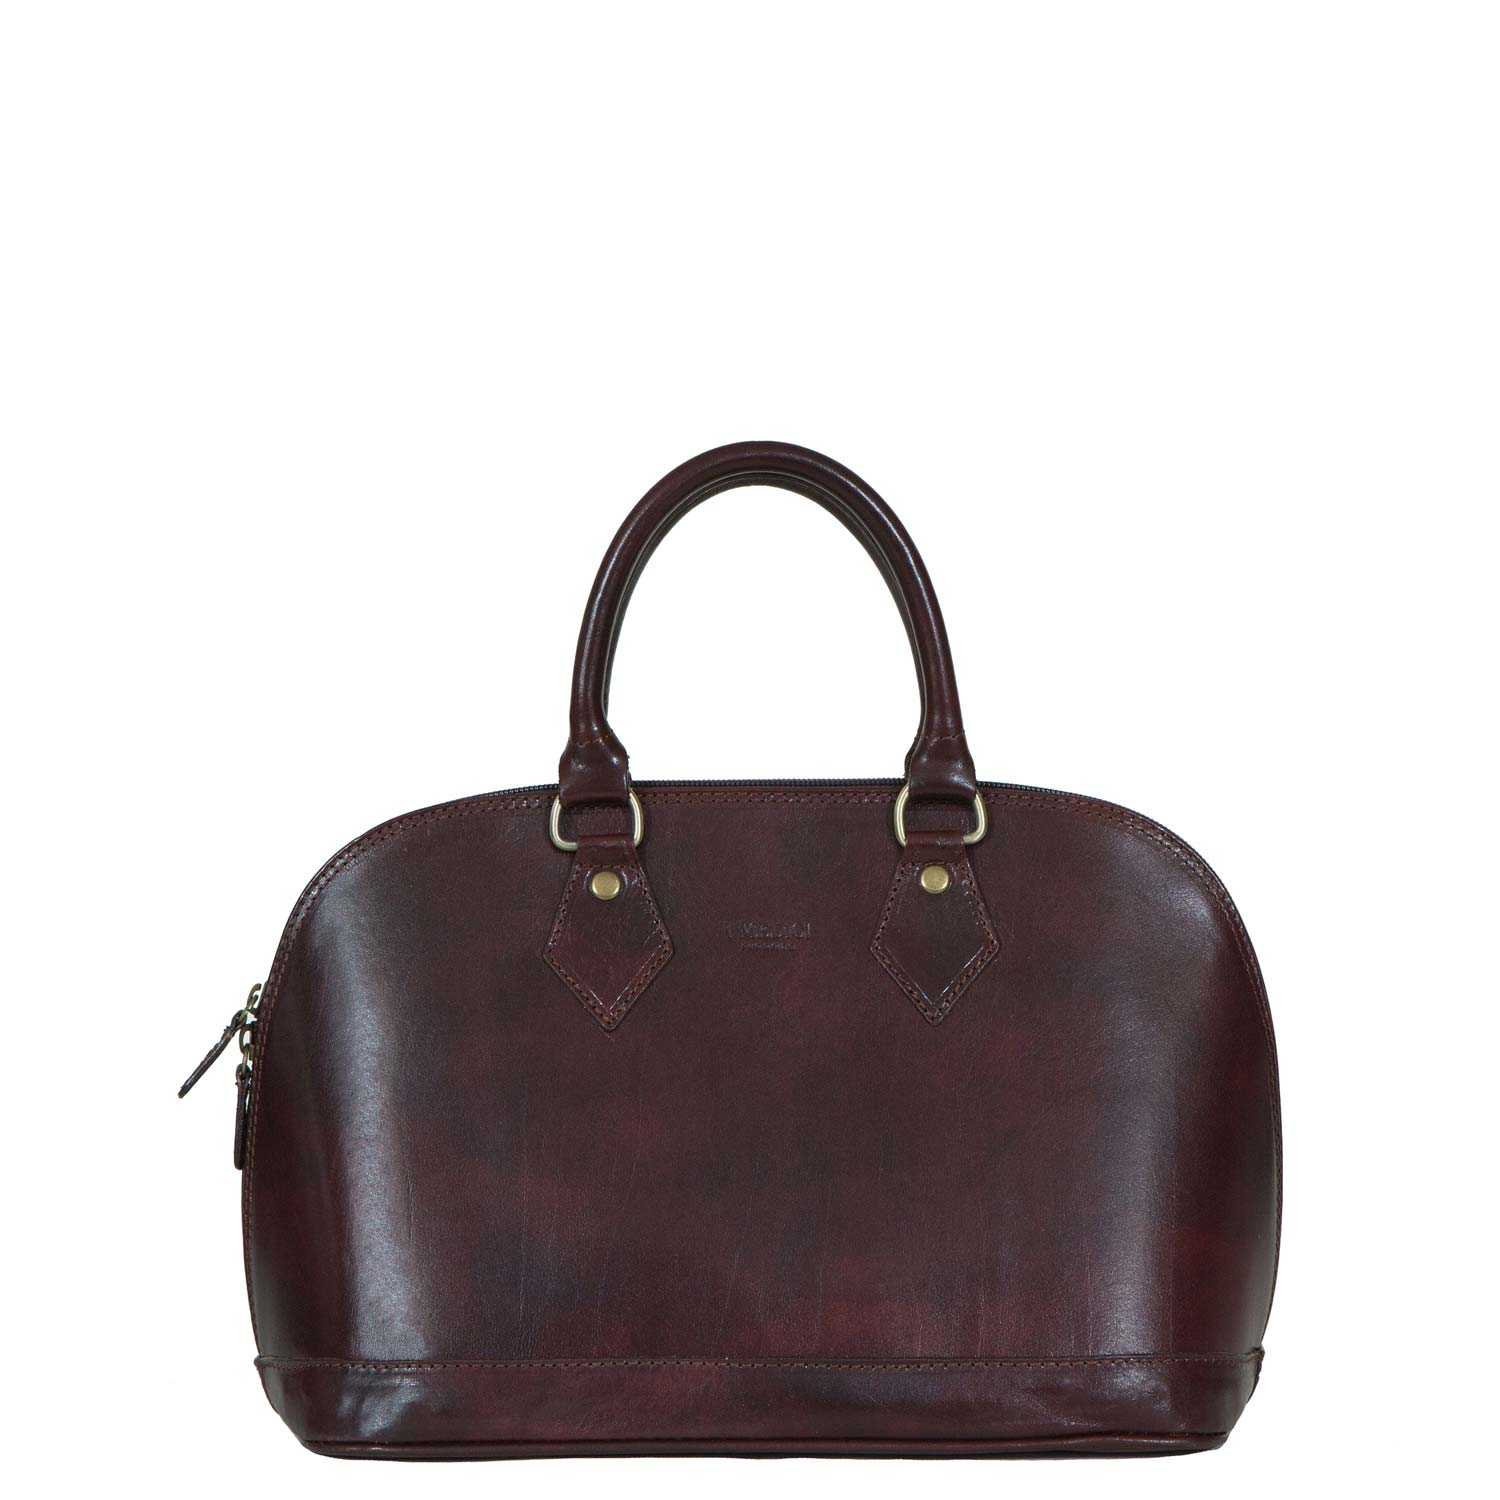 I MEDICI Firenze Italian leather bag - New